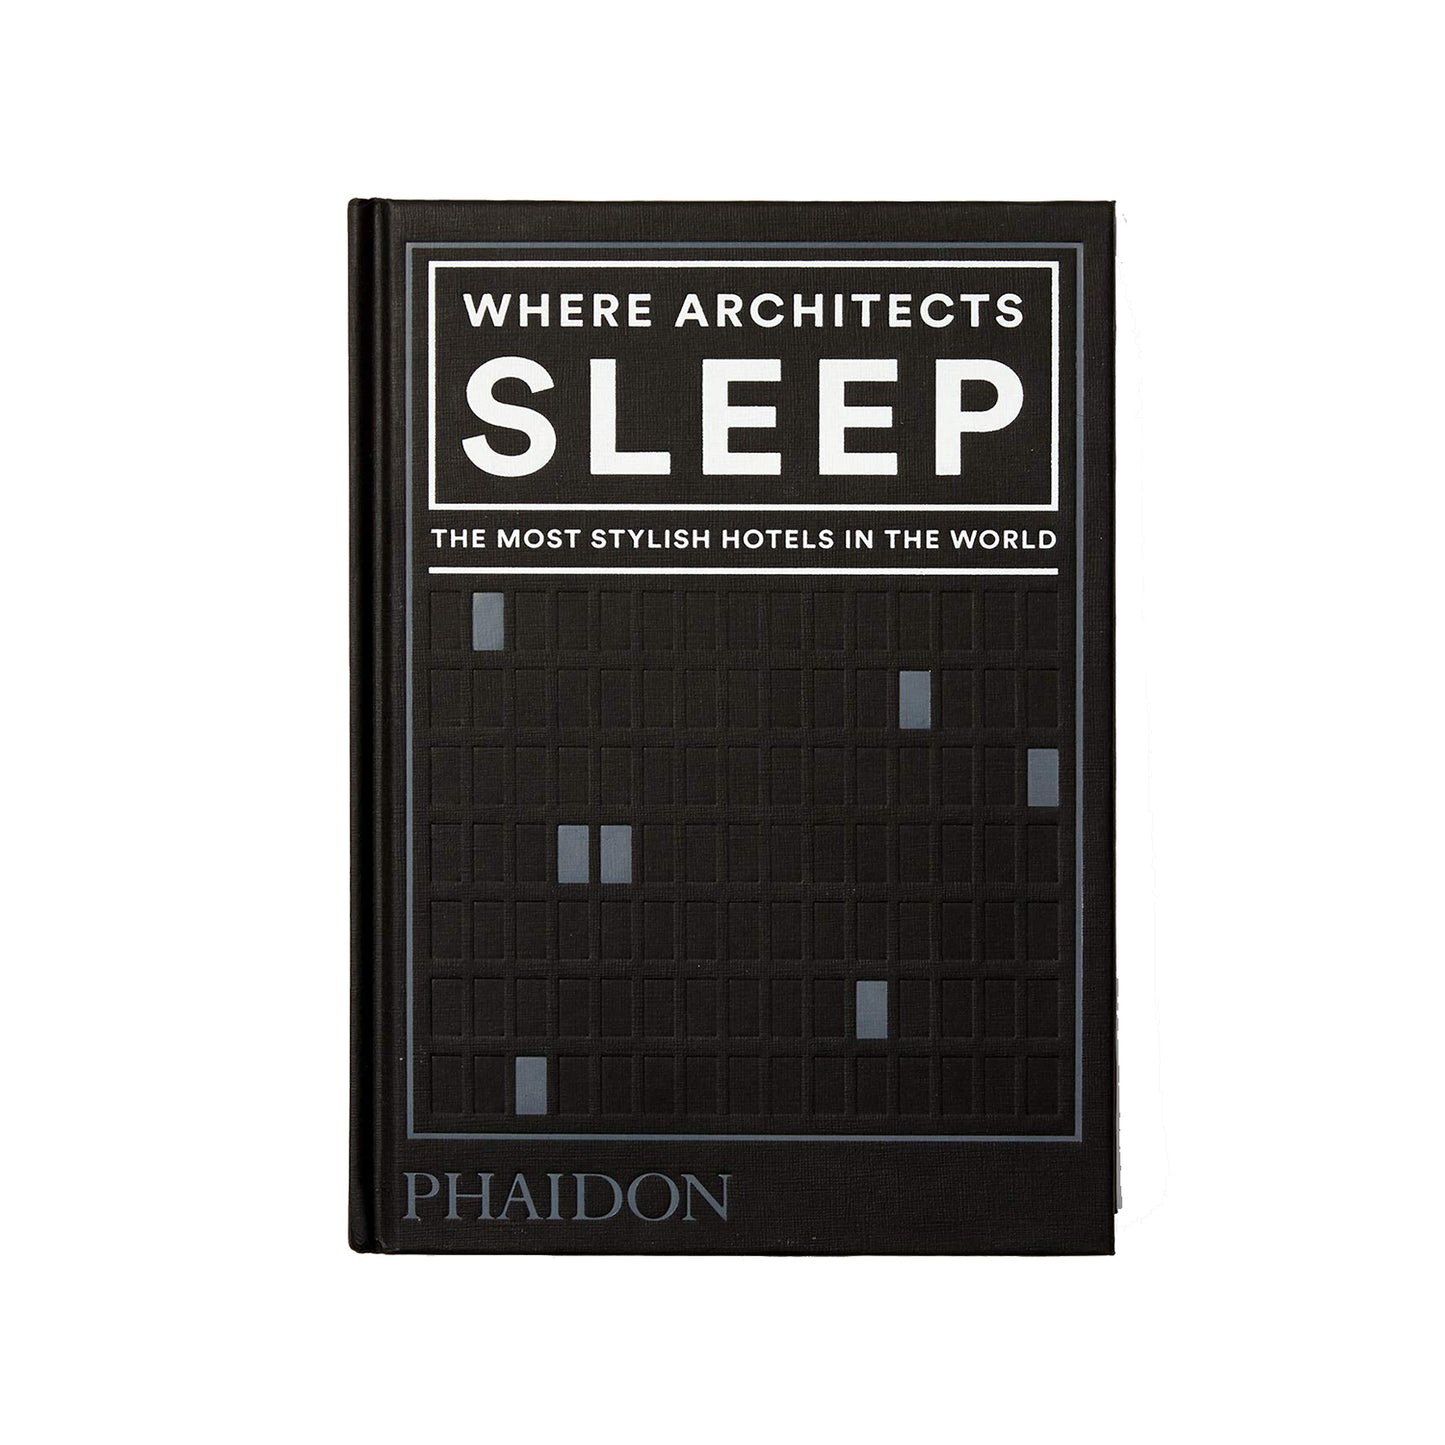 "Where Architects Sleep" by Sarah Miller